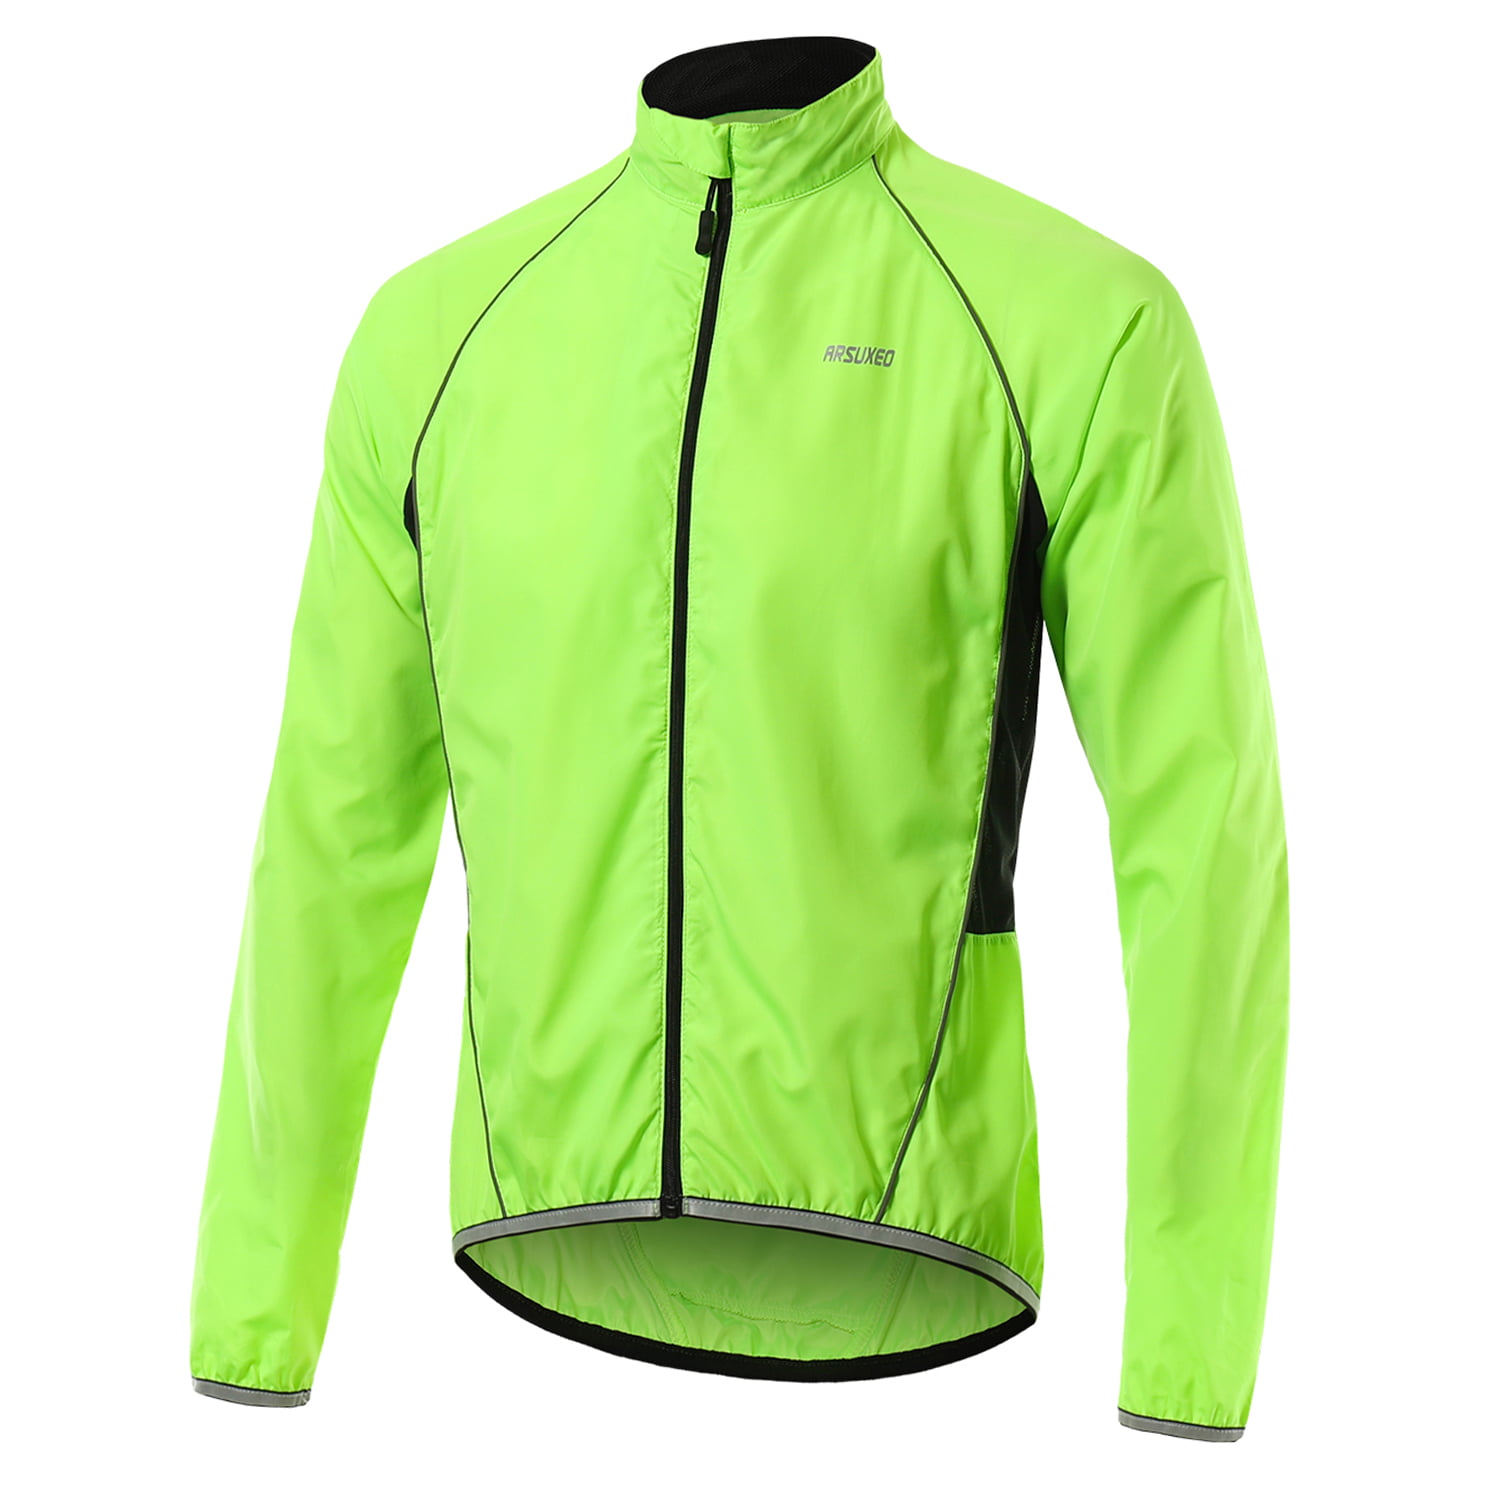 ROCKBROS Cycling Bike Reflective Vest Coat Sportswear Breathable Jersey Green 